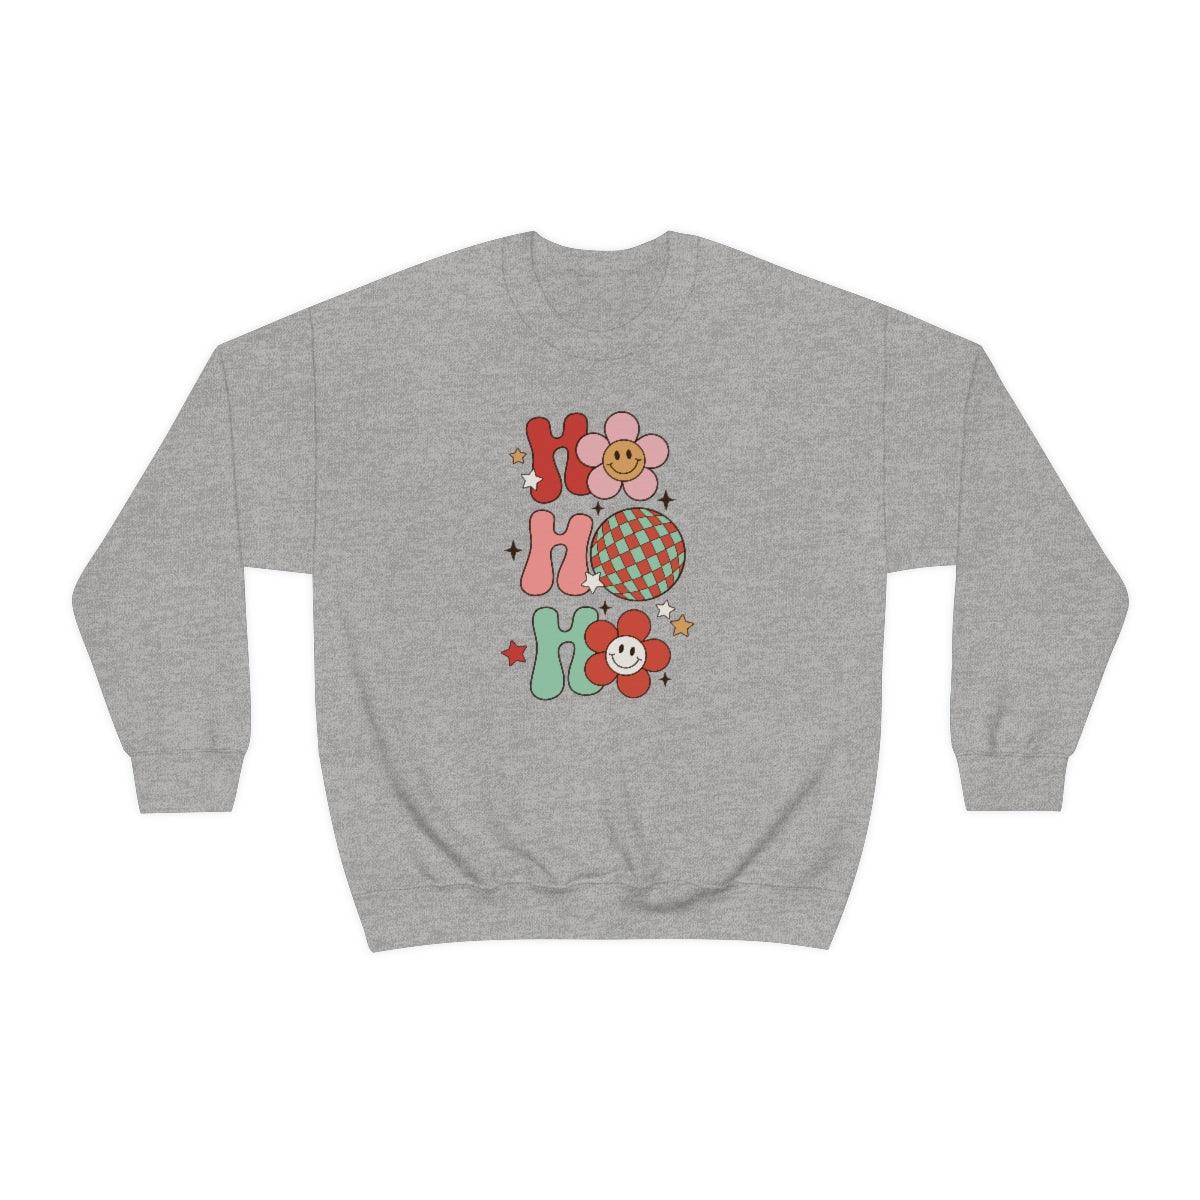 Retro Ho Ho Ho Christmas Crewneck Sweater - Crystal Rose Design Co.